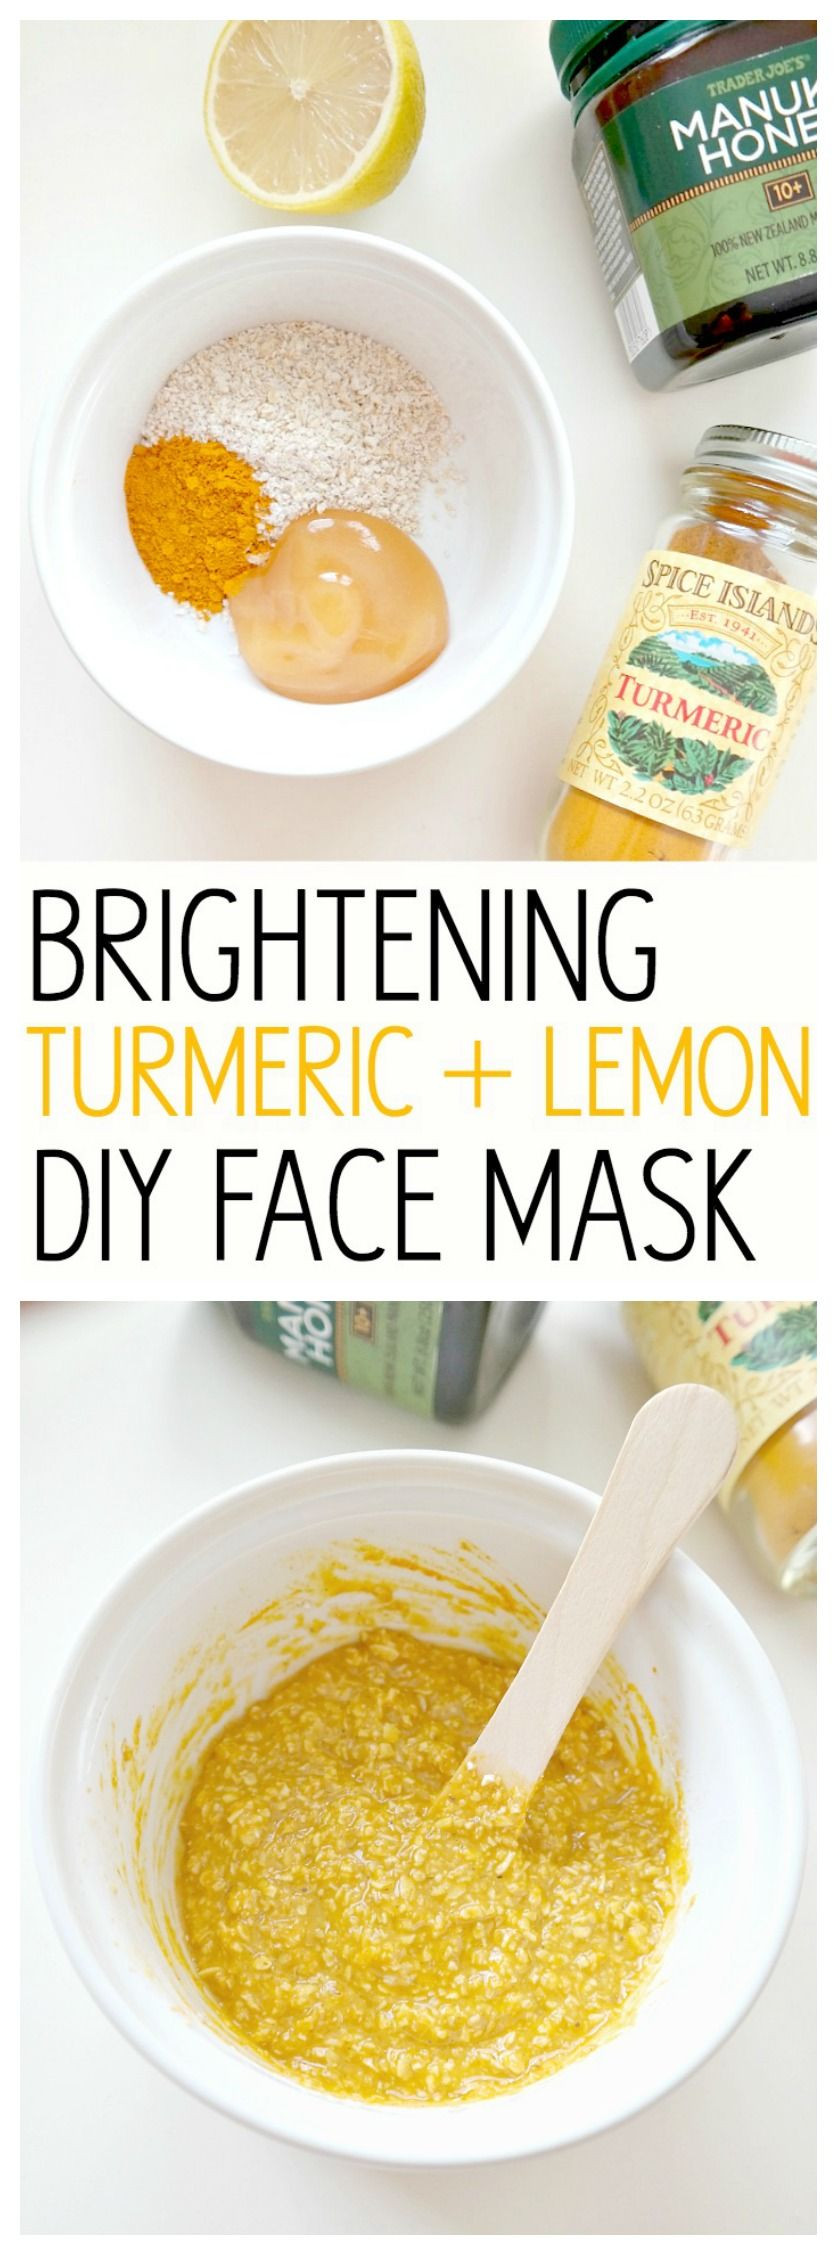 DIY Brightening Face Mask
 Brightening Turmeric and Lemon DIY Face Mask